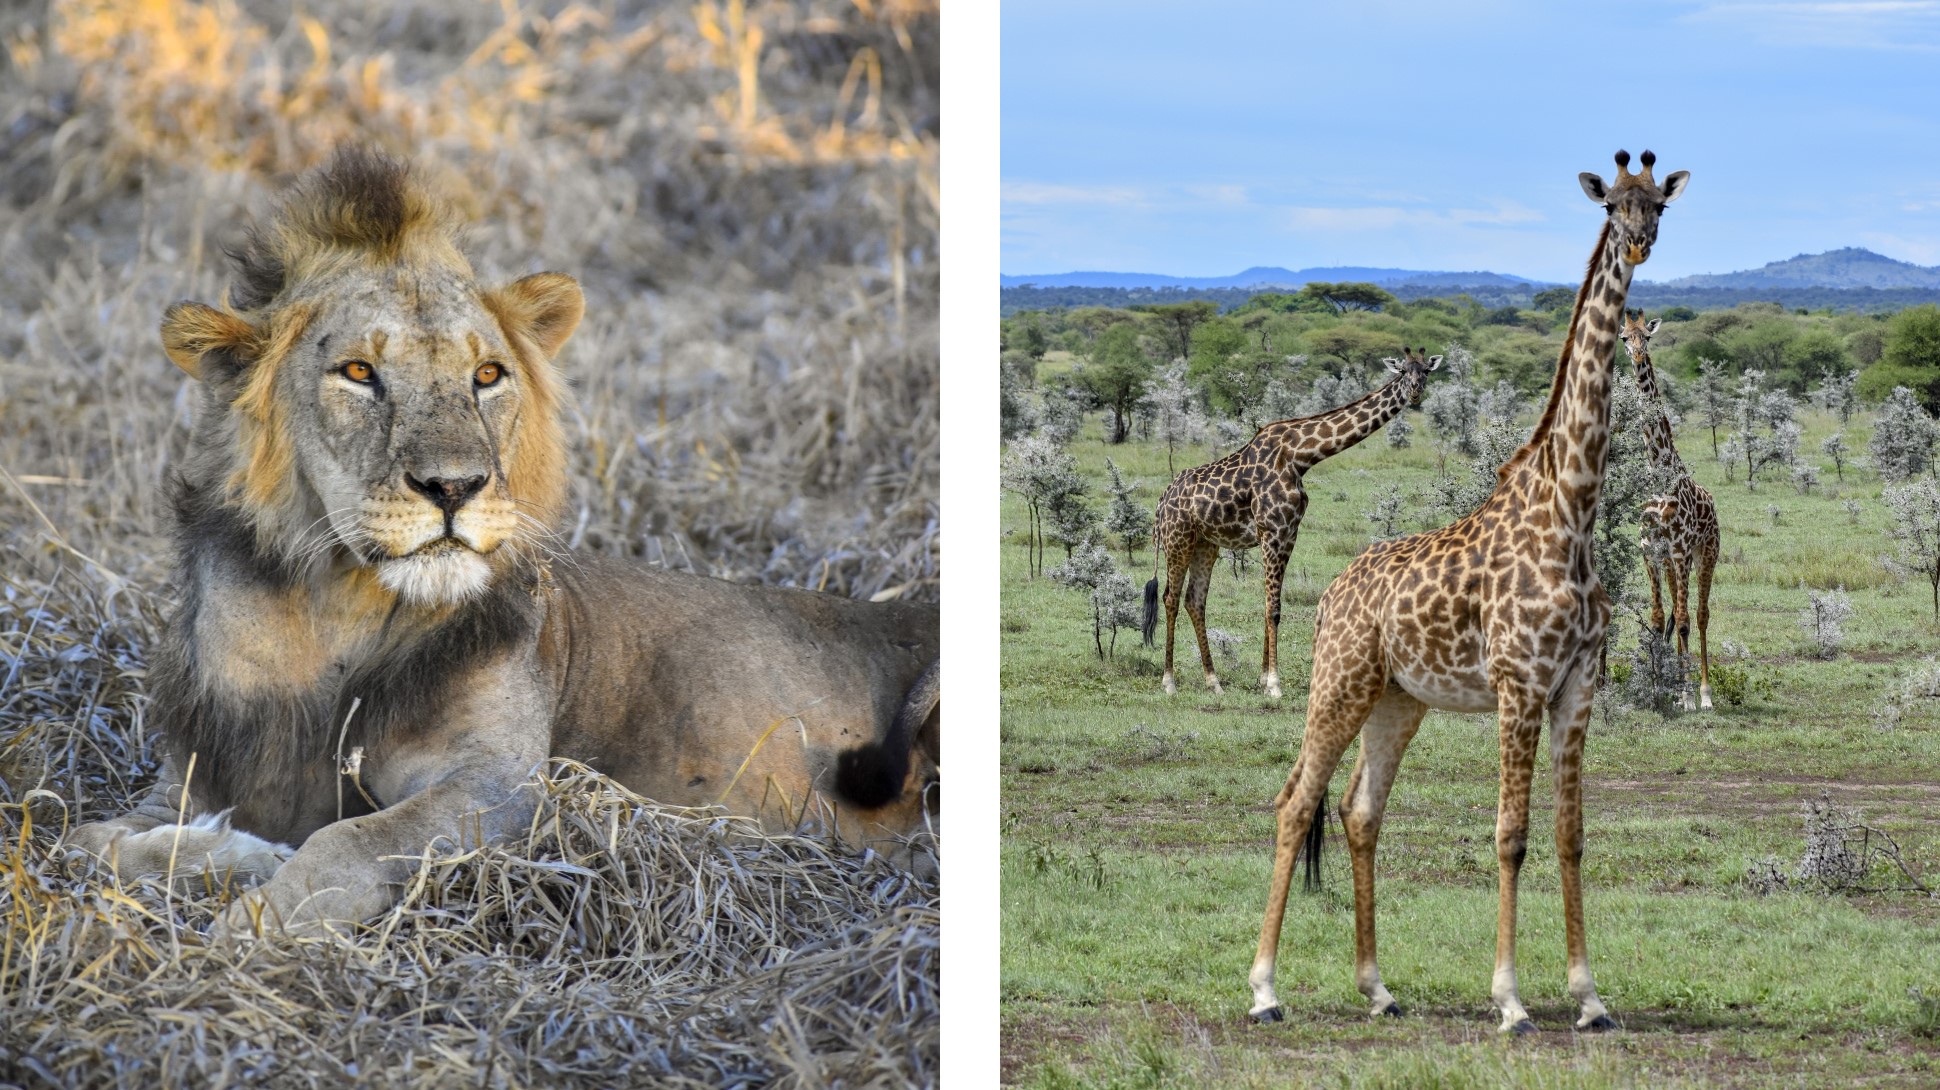 Left, Lion in grass. Right, Giraffe in field